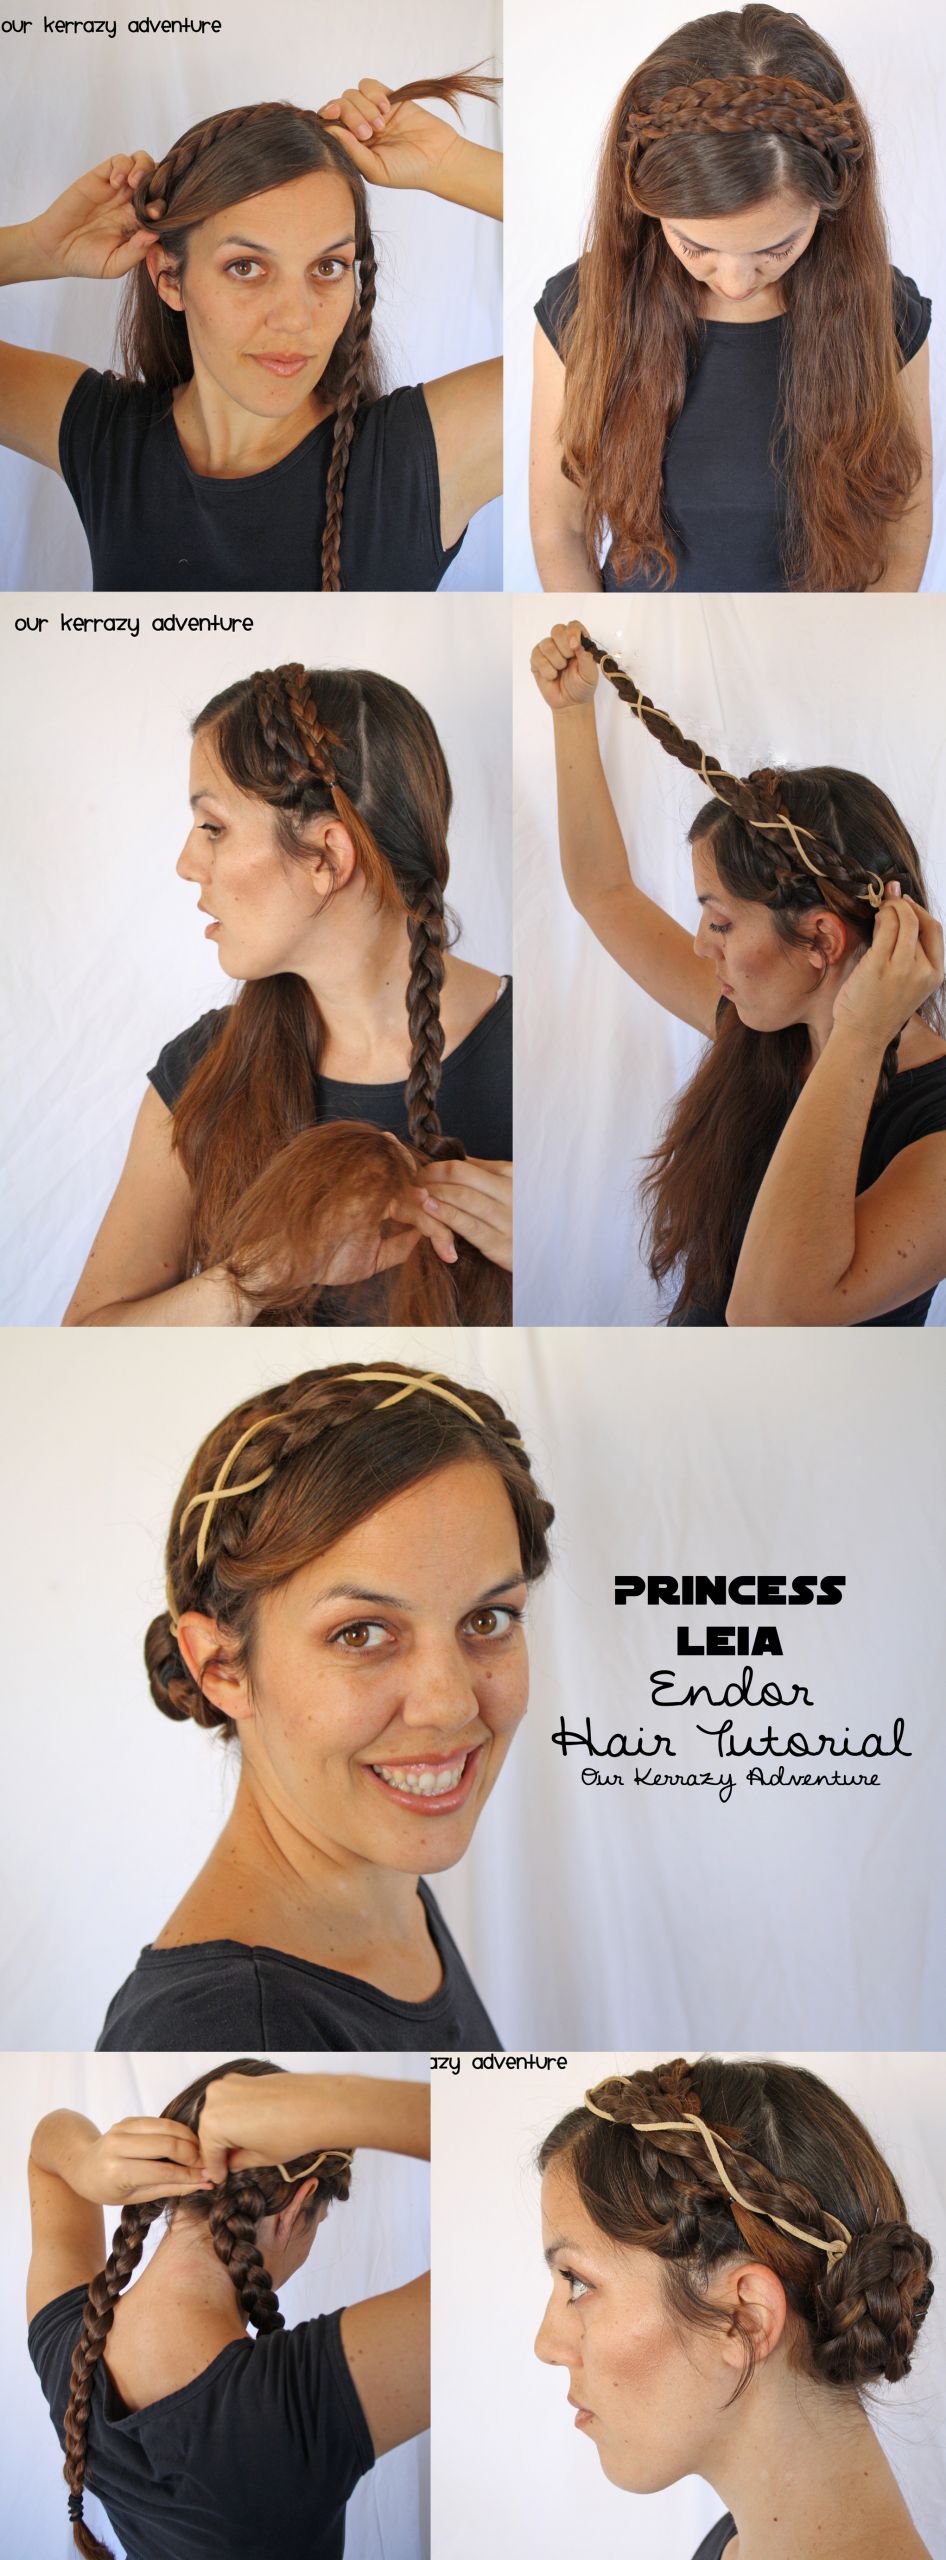 DIY Princess Leia Hair
 Endor Leia Hair Style Tutorial Our Kerrazy Adventure